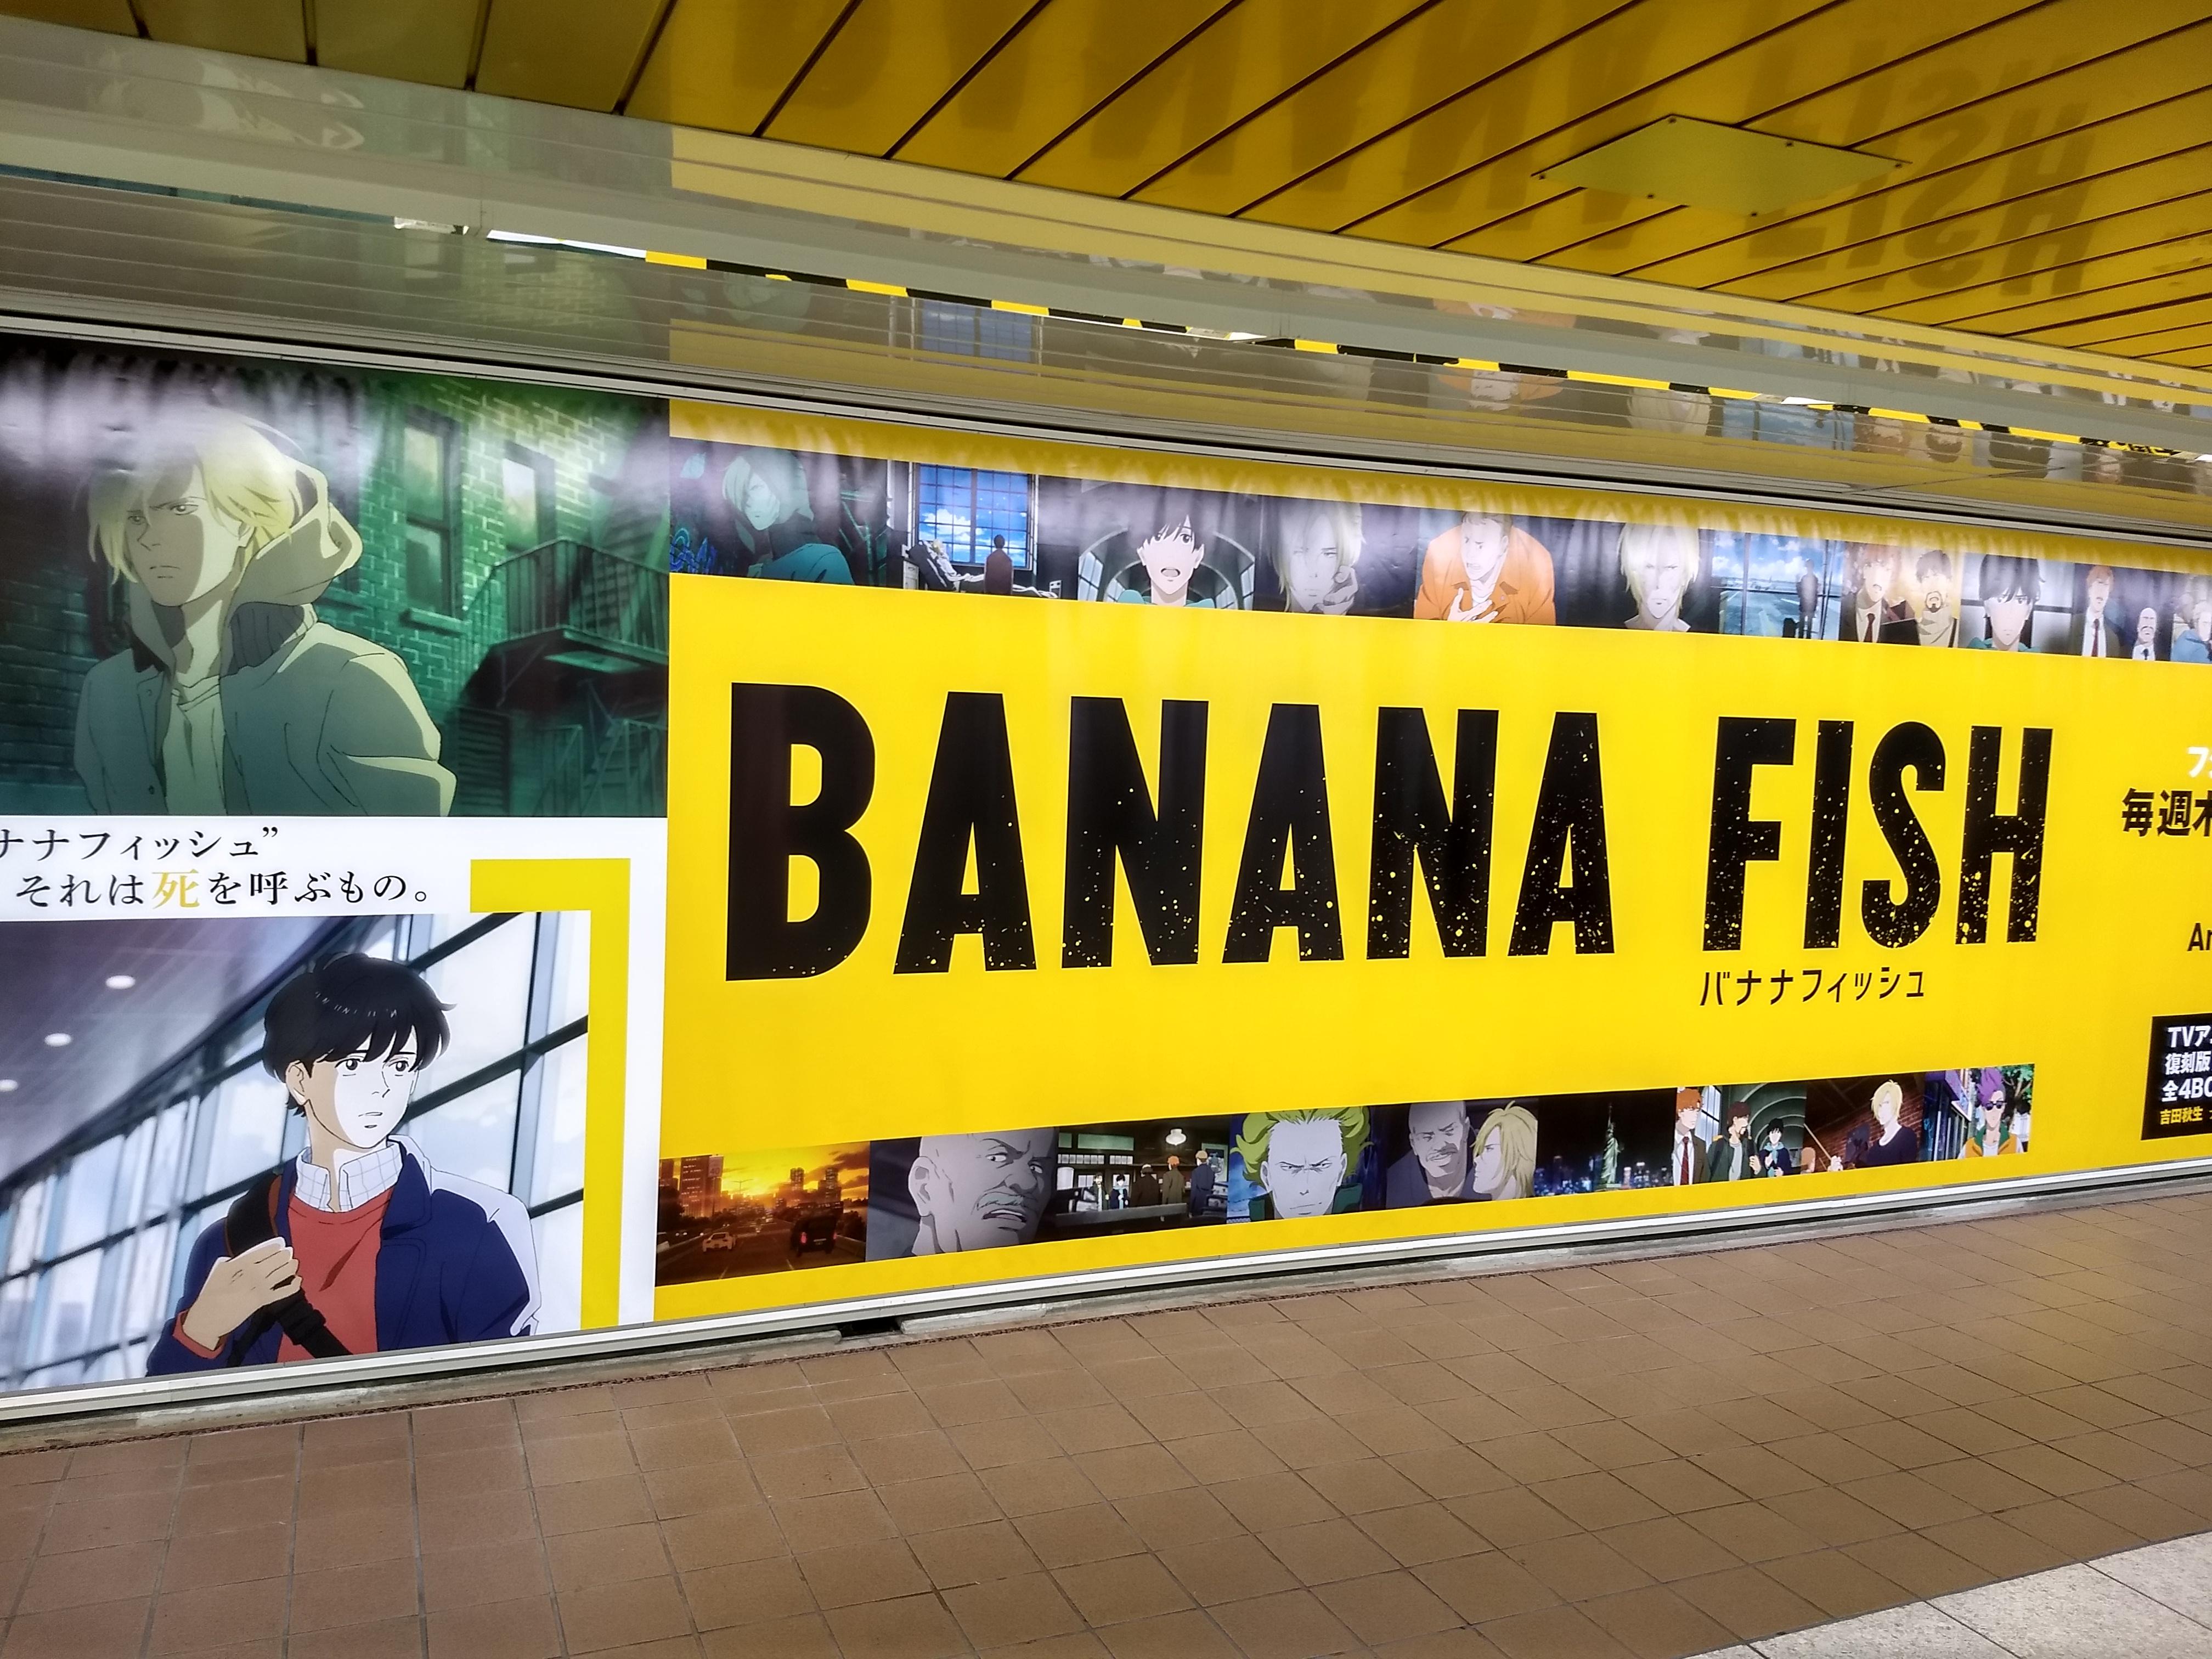 Banana Fish poster i found in Shinjuku Station today. I personally